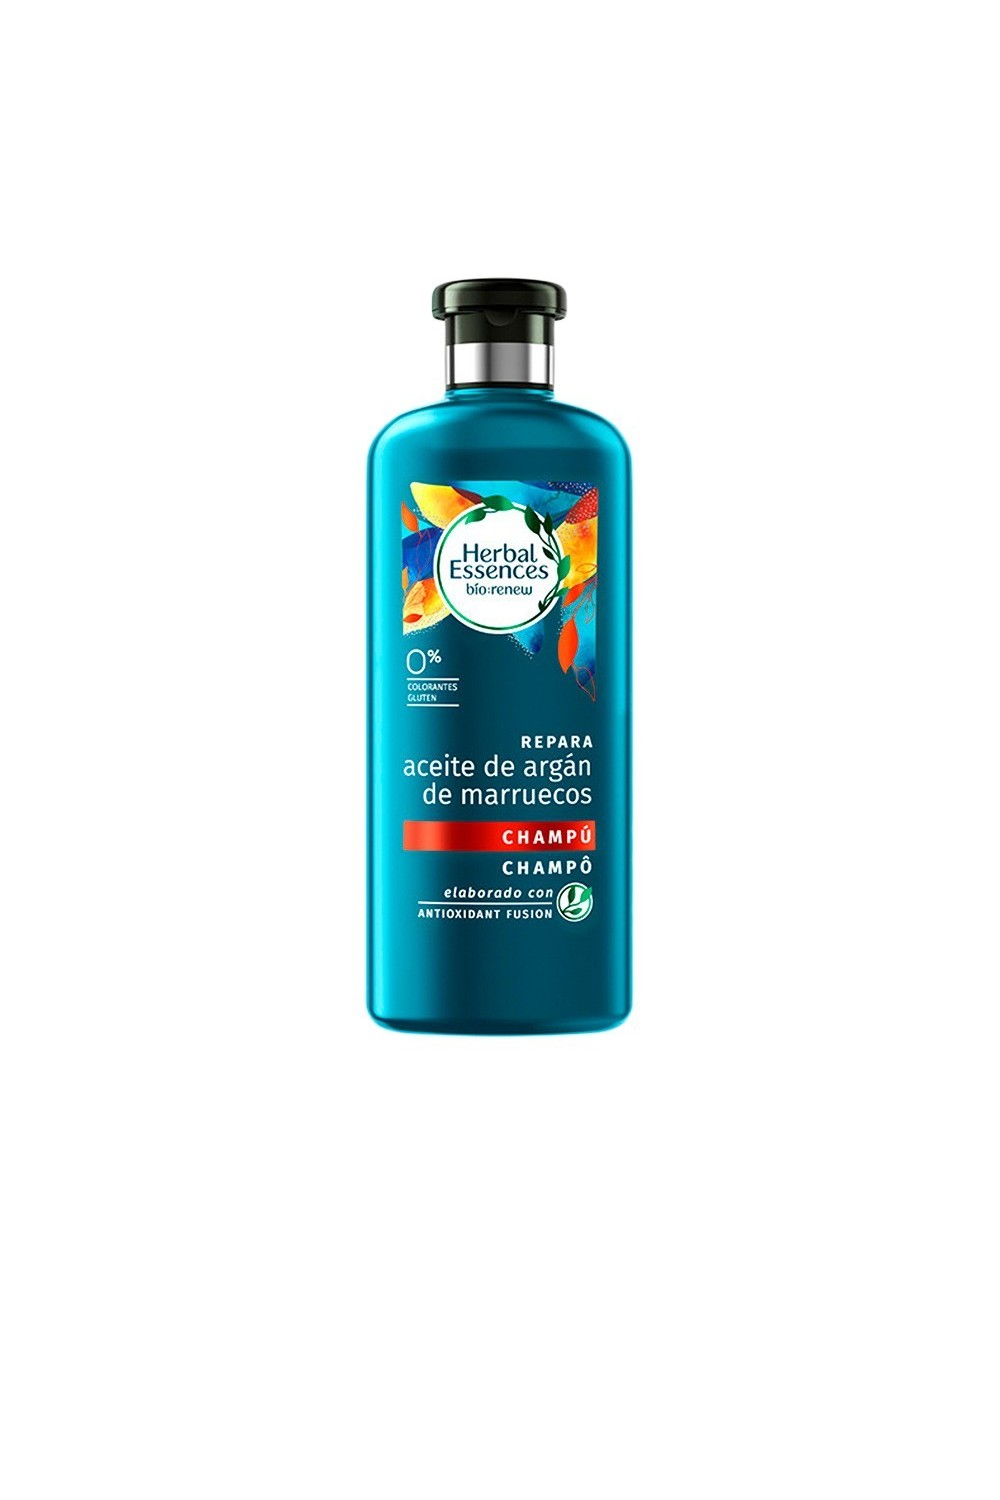 Herbal Essences Argan Oil Shampoo Repair 400ml